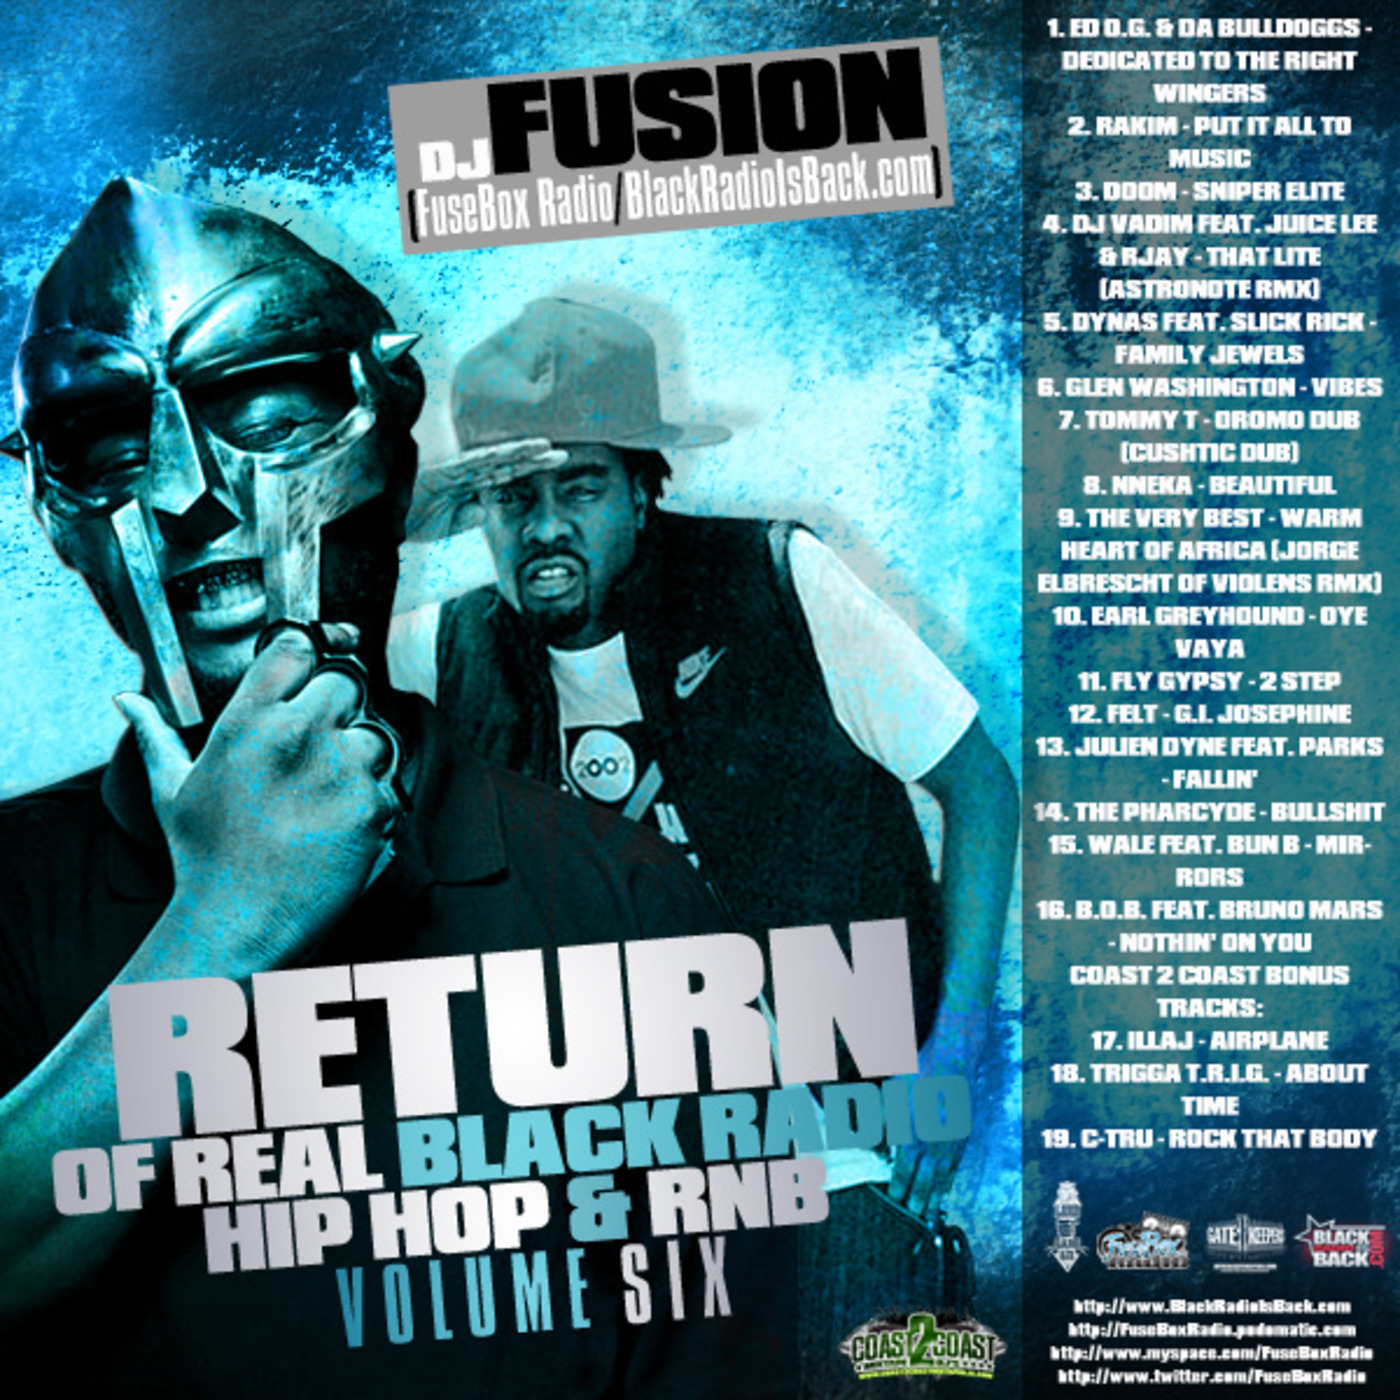 FuseBox Radio #492 - Return of Real Black Radio Vol. 6 by DJ Fusion [Week of July 21, 2016: FLASHBACK MIXTAPE EPISODE #2]